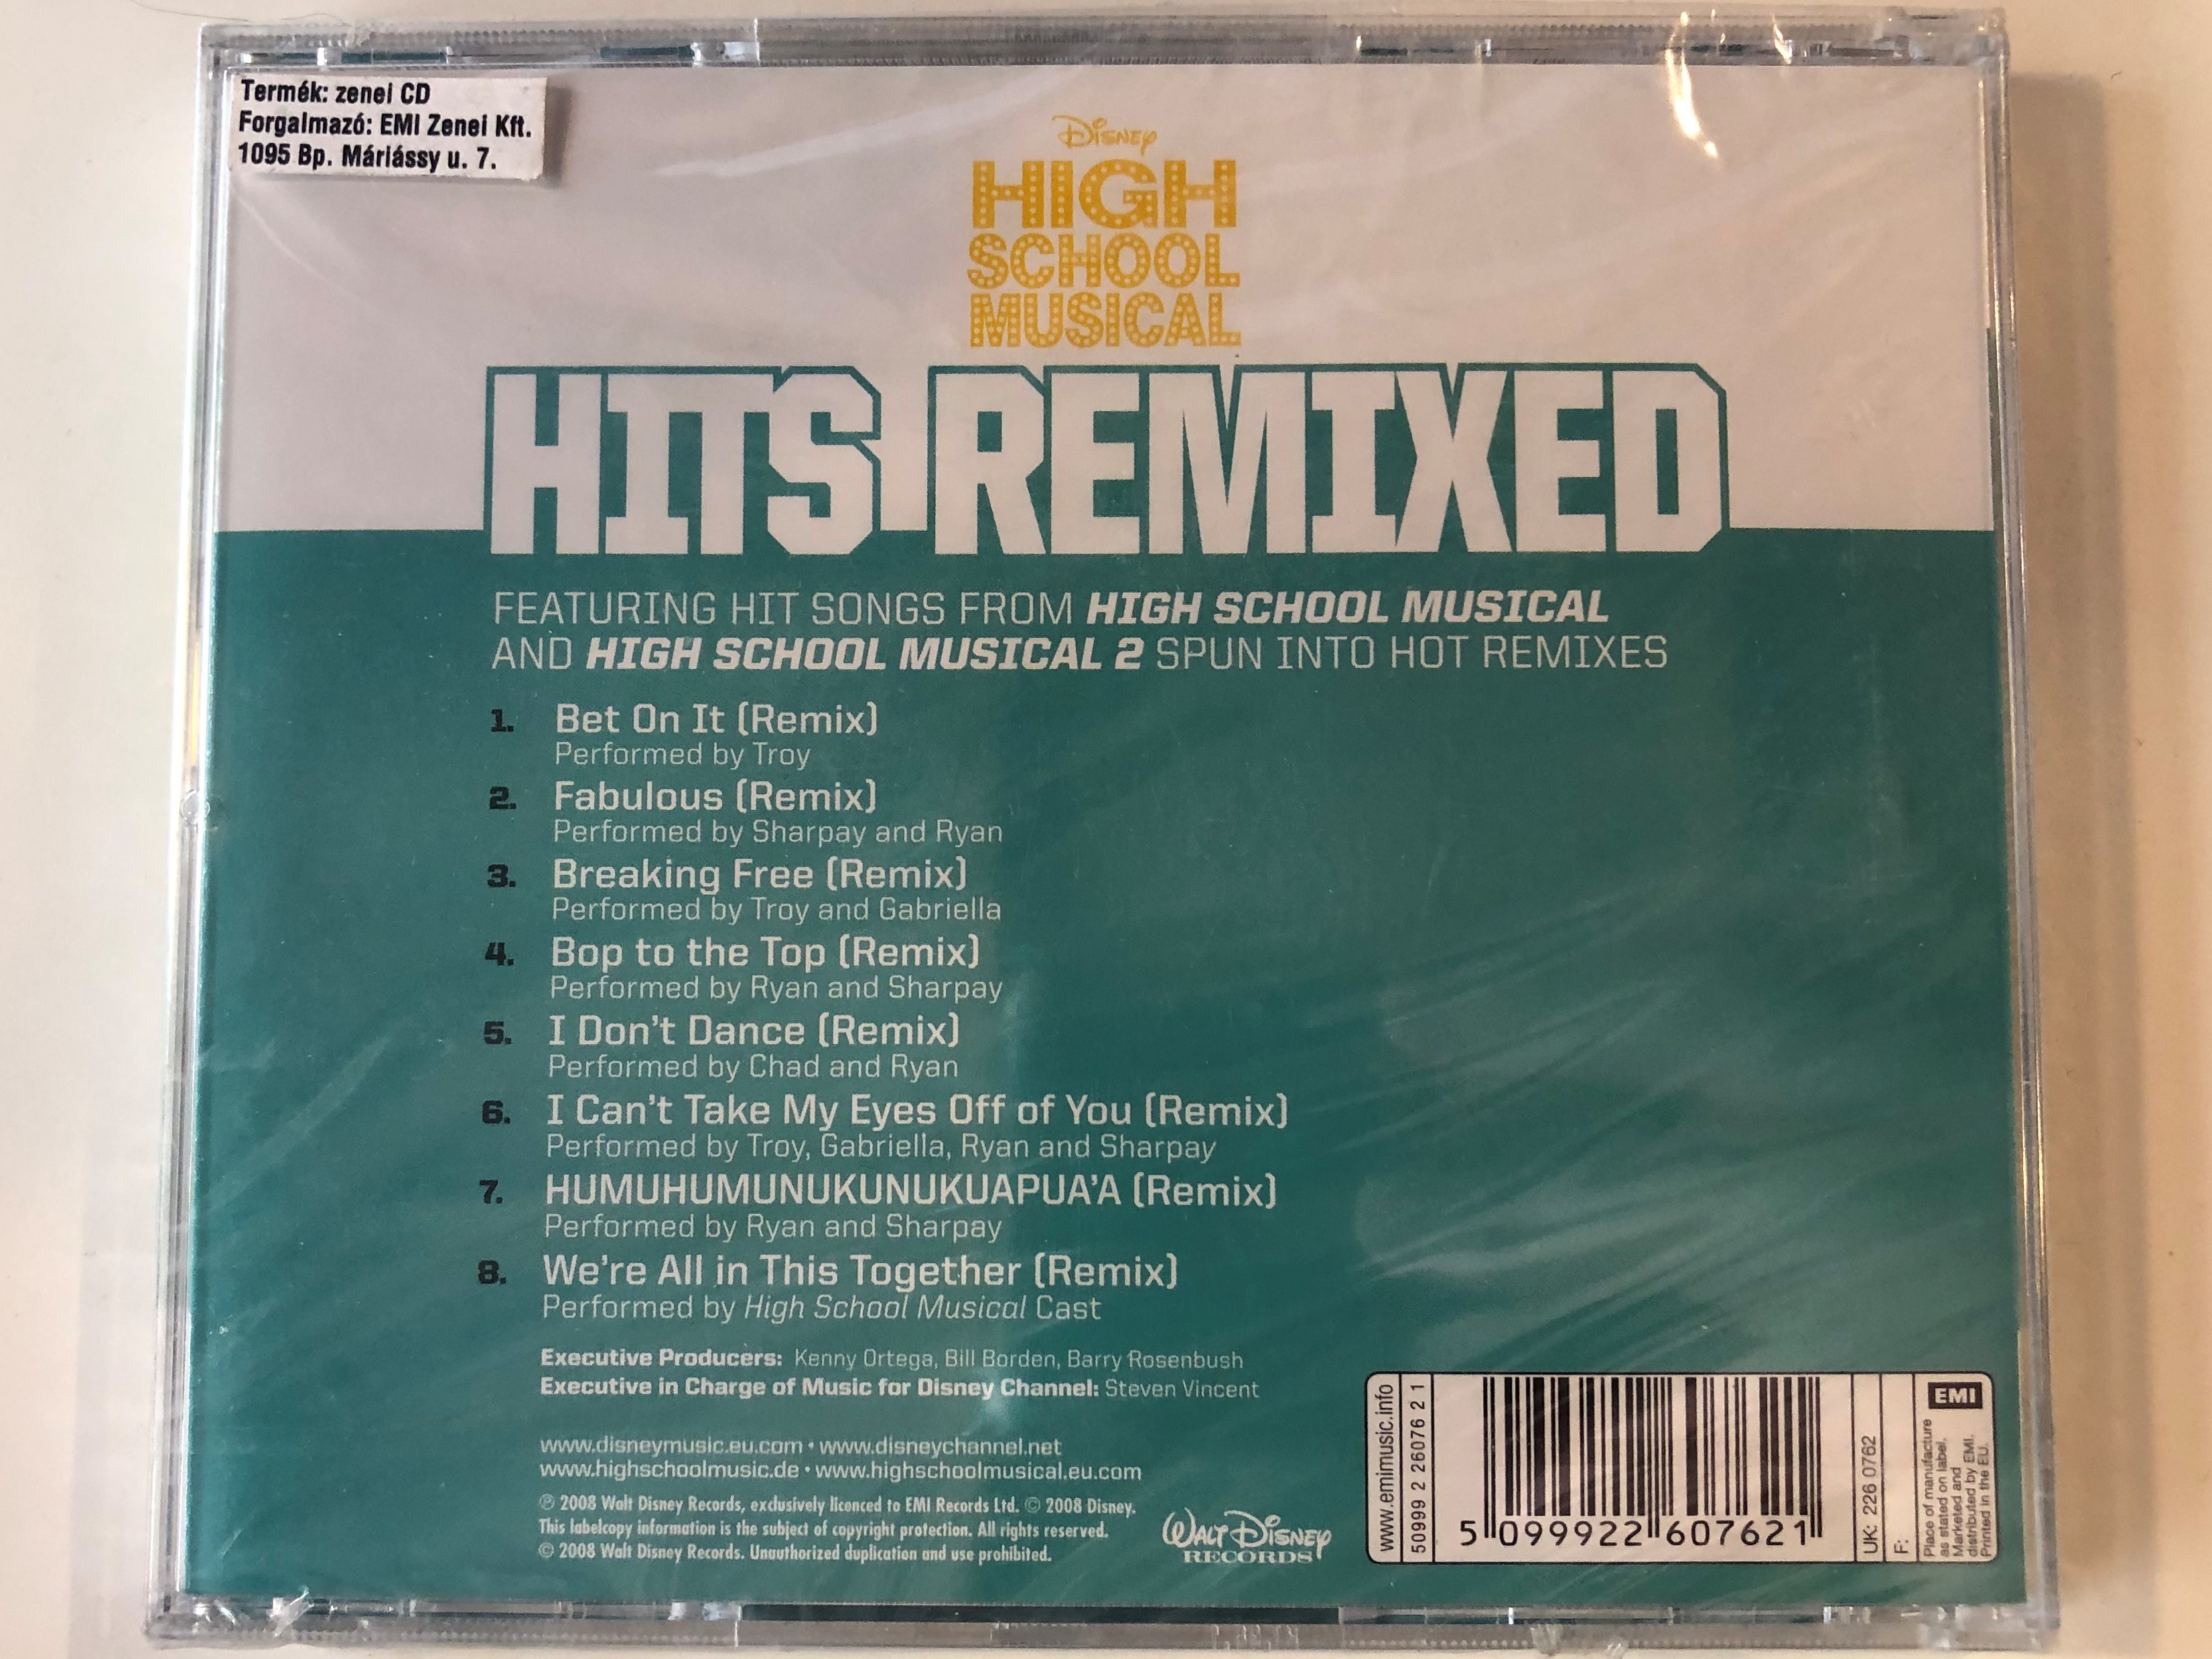 high-school-musical-hits-remixed-walt-disney-records-audio-cd-2008-226-0762-2-.jpg